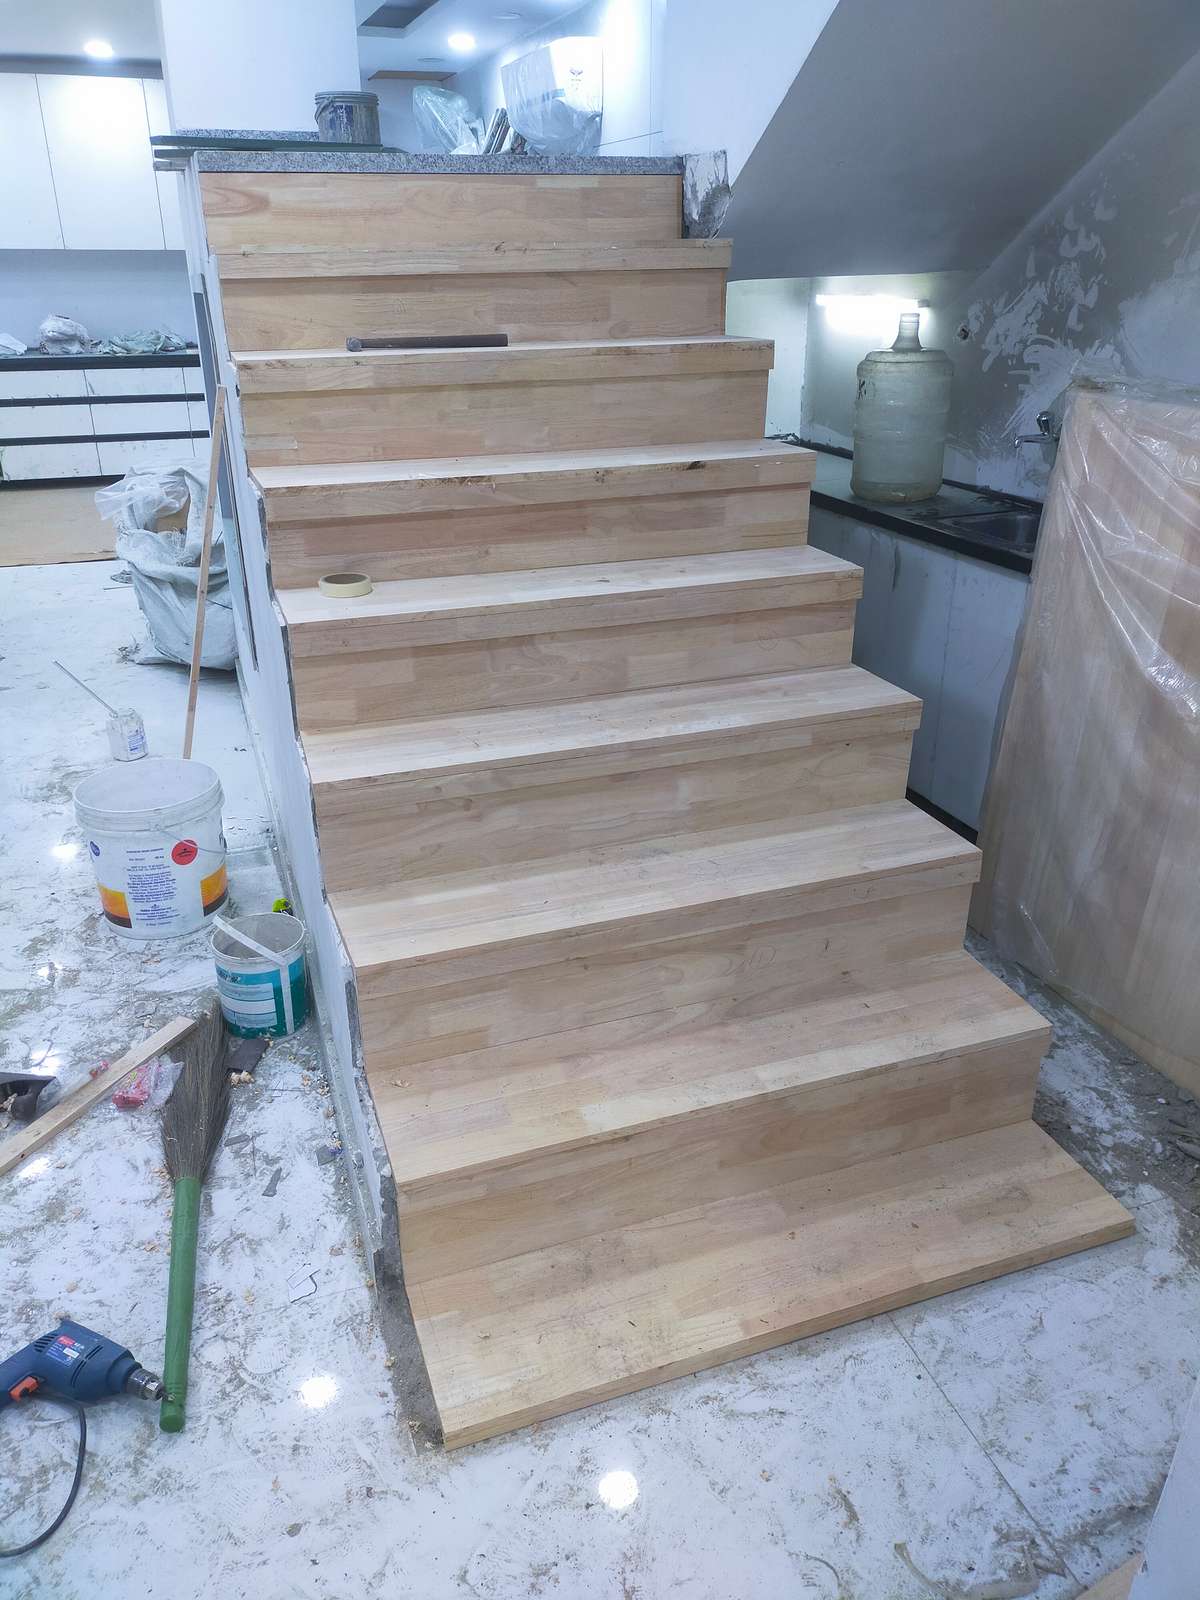 wooden stair Rs. @80 #woodenstair #stair  #rubberwood  ##restaurantdesigner  #Residencedesign  #WallDesigns  #WALL_PANELLING  #WallDecors  #wallpannel  #restrointerior  #restaurantrenovation  #restaurant_bar_cafe_designer #koloviral  #kolopost  #koloapp #lowbudget  #ModularKitchen  #KitchenIdeas  #kichan  #Modularfurniture  #trandingdesign  #amitsharma  #koloapp  #kolopost  #koloviral #LUXURY_INTERIOR 
 #luxuryhomedecore  #luxurydesign  #LUXRYPENAL
 #tvcabinet  #tvunits  #lcdunitdesign  #LCDpanel 
 #lcdtvunitdesign  #koloviral  #koloapp  #koloamaterials  #kolopost#Sofas  #LUXURY_SOFA  #LUXURY_INTERIOR  #amitsharma  #LivingroomDesigns  #LivingRoomSofa  #NEW_SOFA  #LeatherSofa  #sofadesign #Barcounter  #Bar  #DressingTable   #lowbudget  #kolopost  #koloapp  #koloviral #InteriorDesigner  #interiordesin
 #InteriorDesign  #HouseDesigns  #trandingdesign  #tranding #KitchenIdeas  #HouseConstruction  #ModularKitchen  #plywoodlamination  #interiordecoration  #interiordecor   #tvunits  #Wardrobe